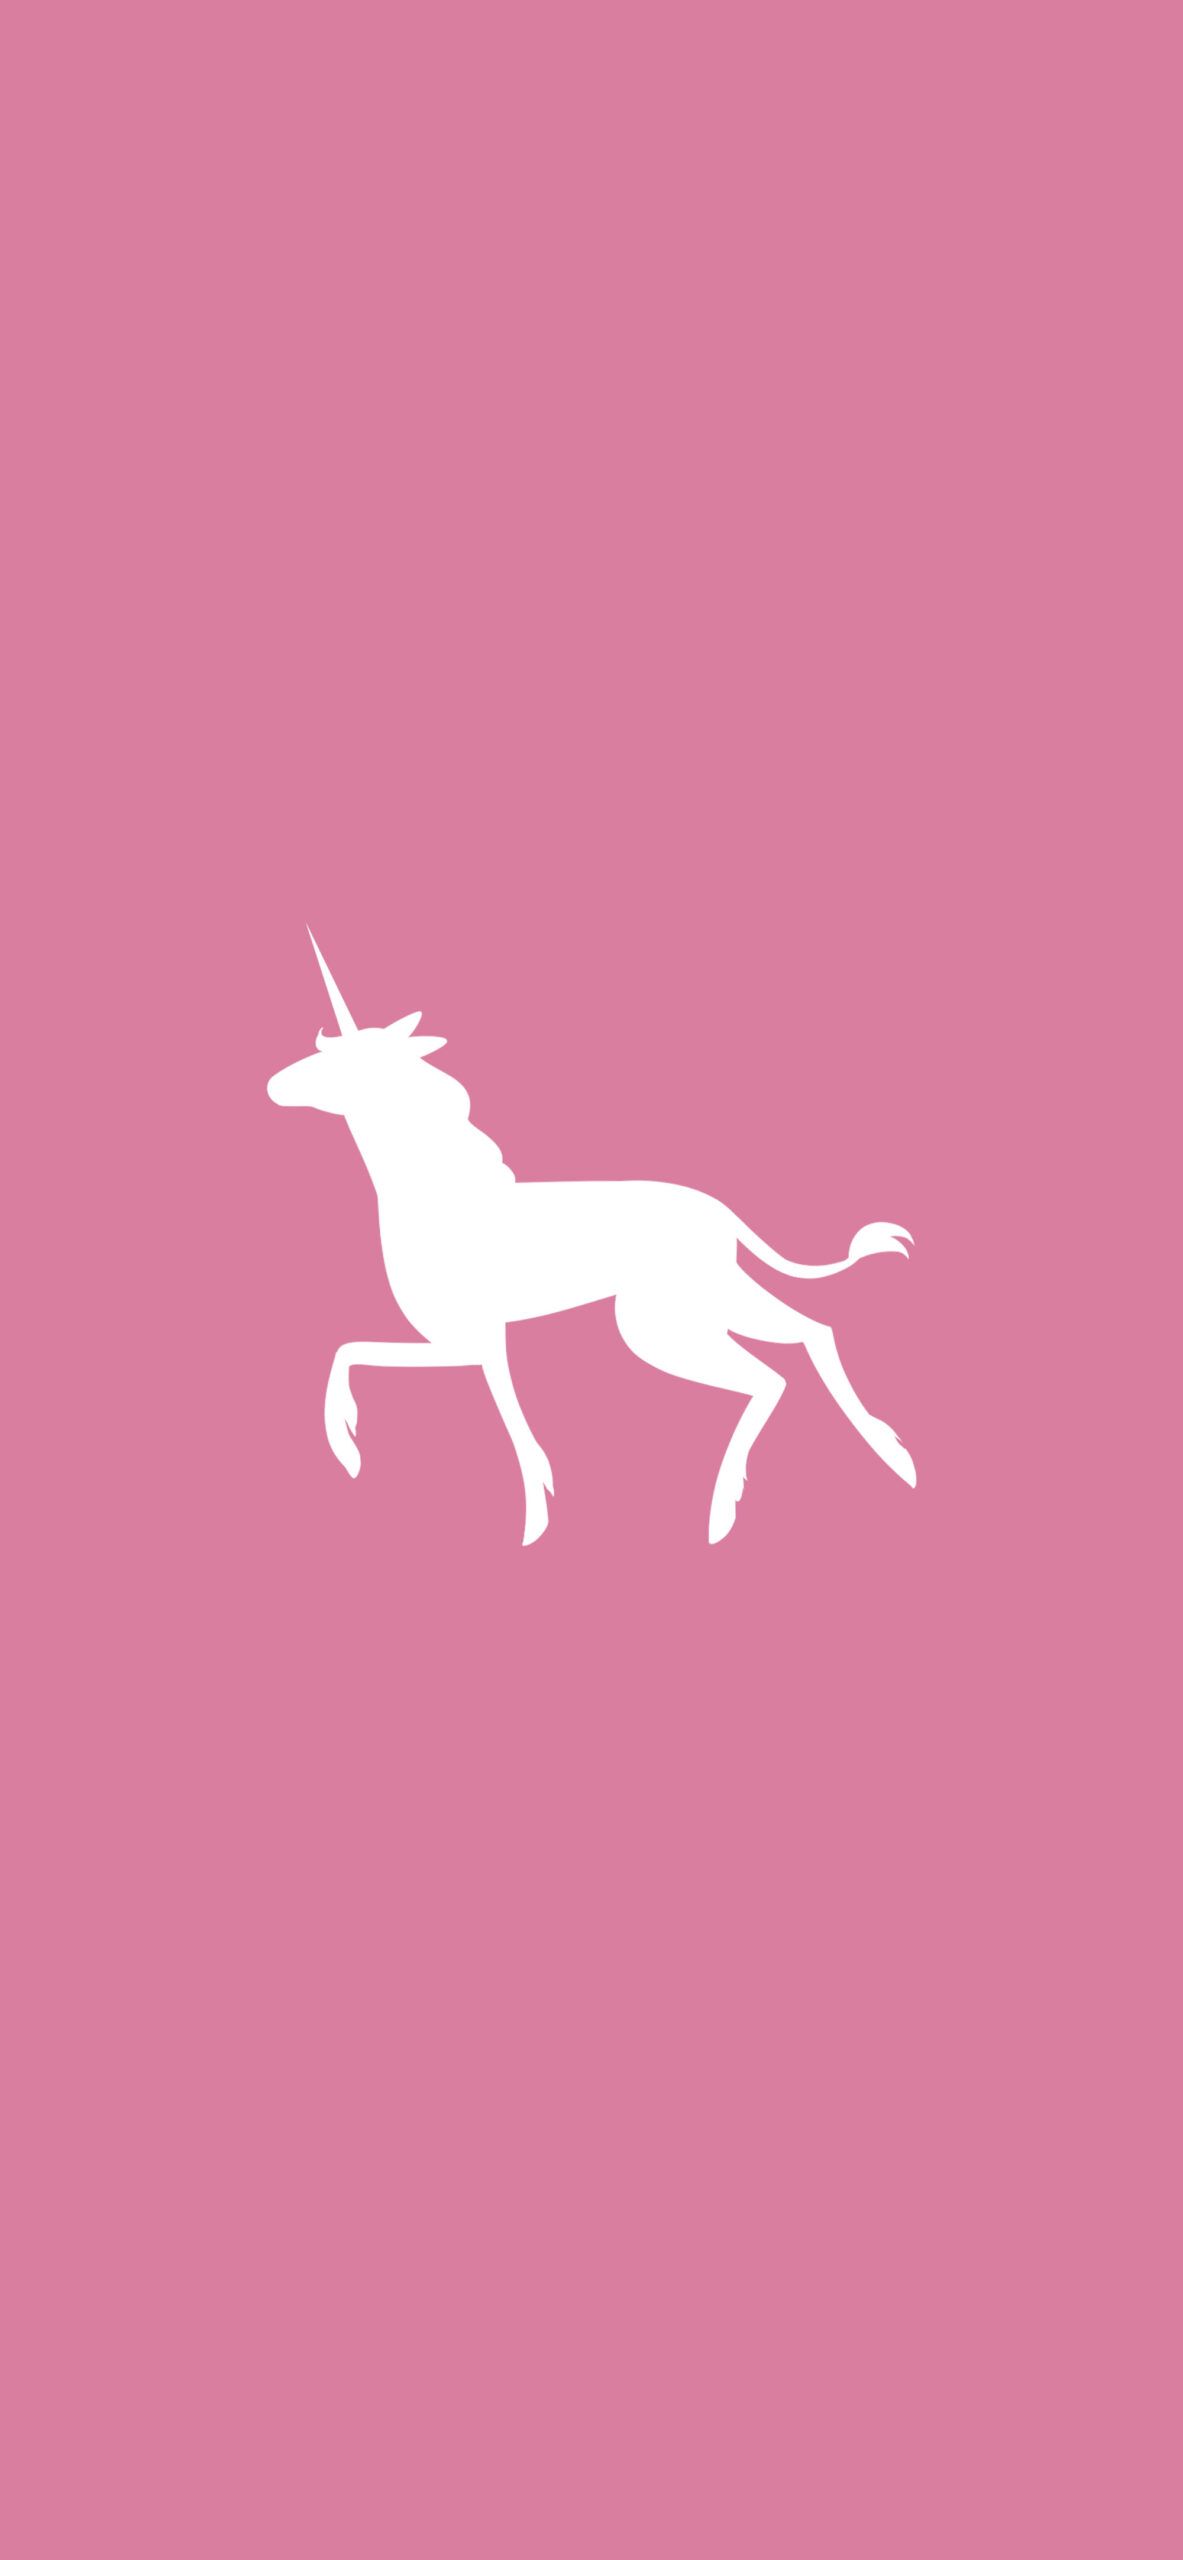 A white unicorn running on pink background - Unicorn, minimalist